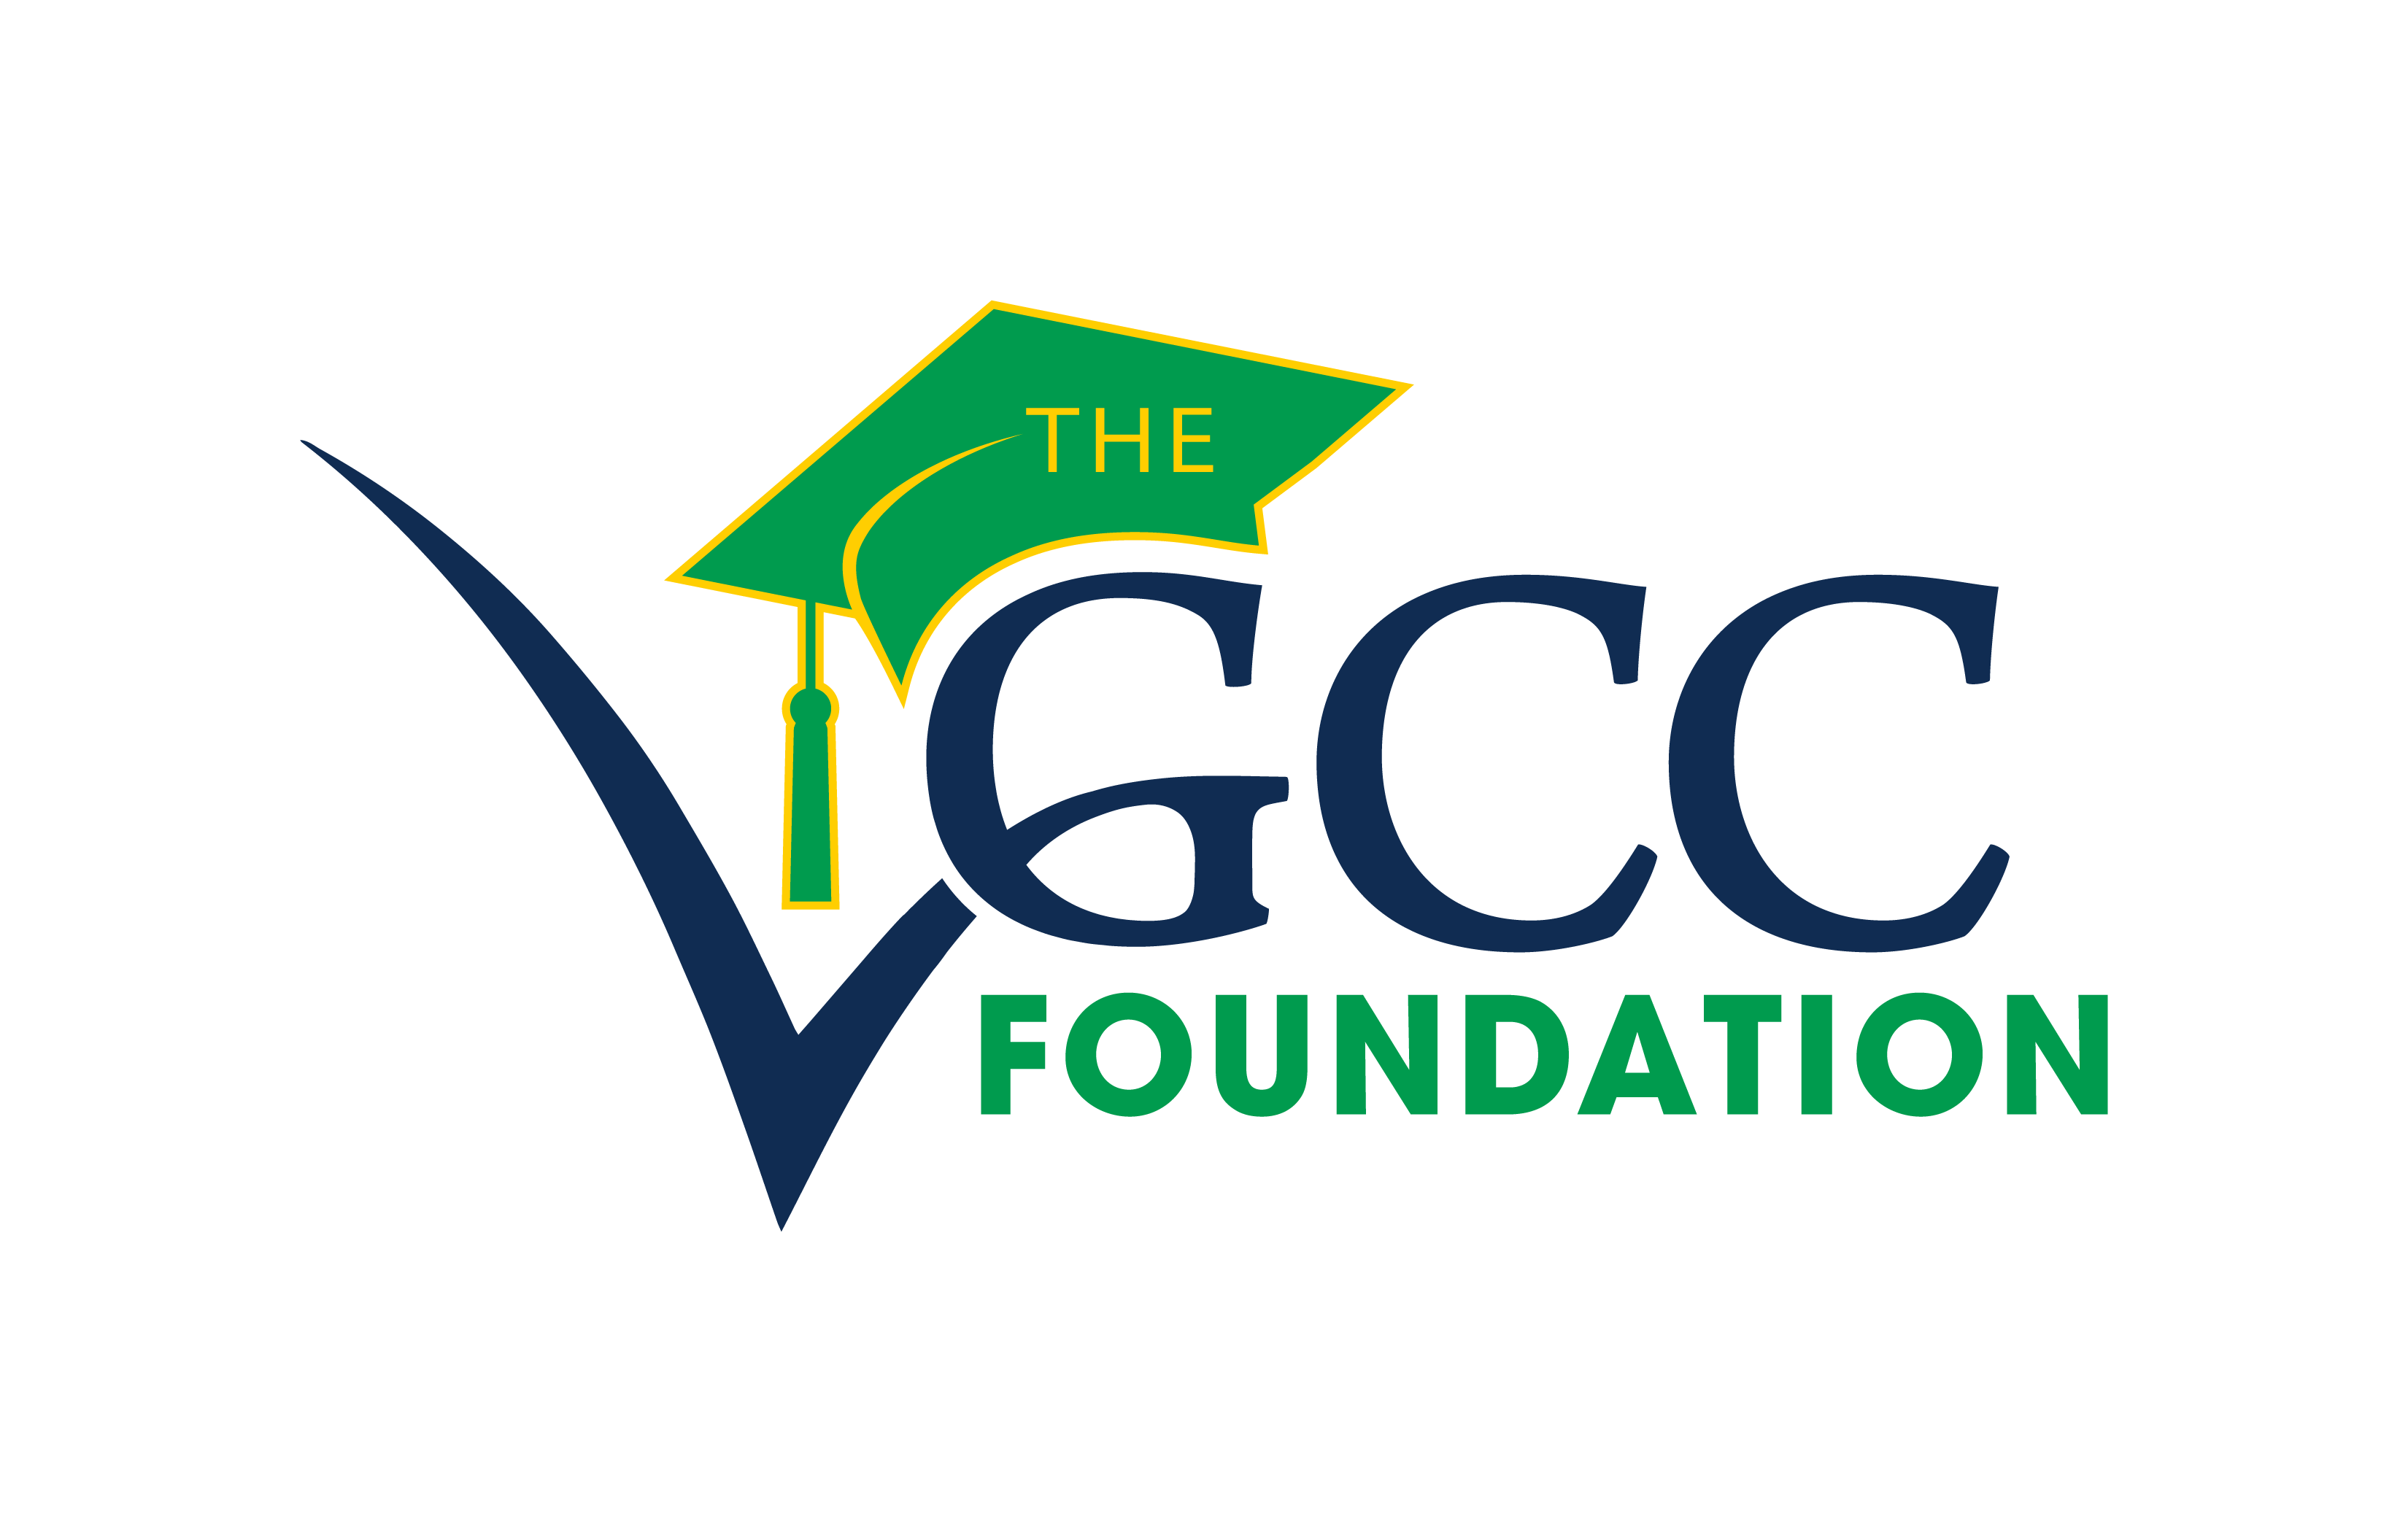 The VGCC Foundation logo